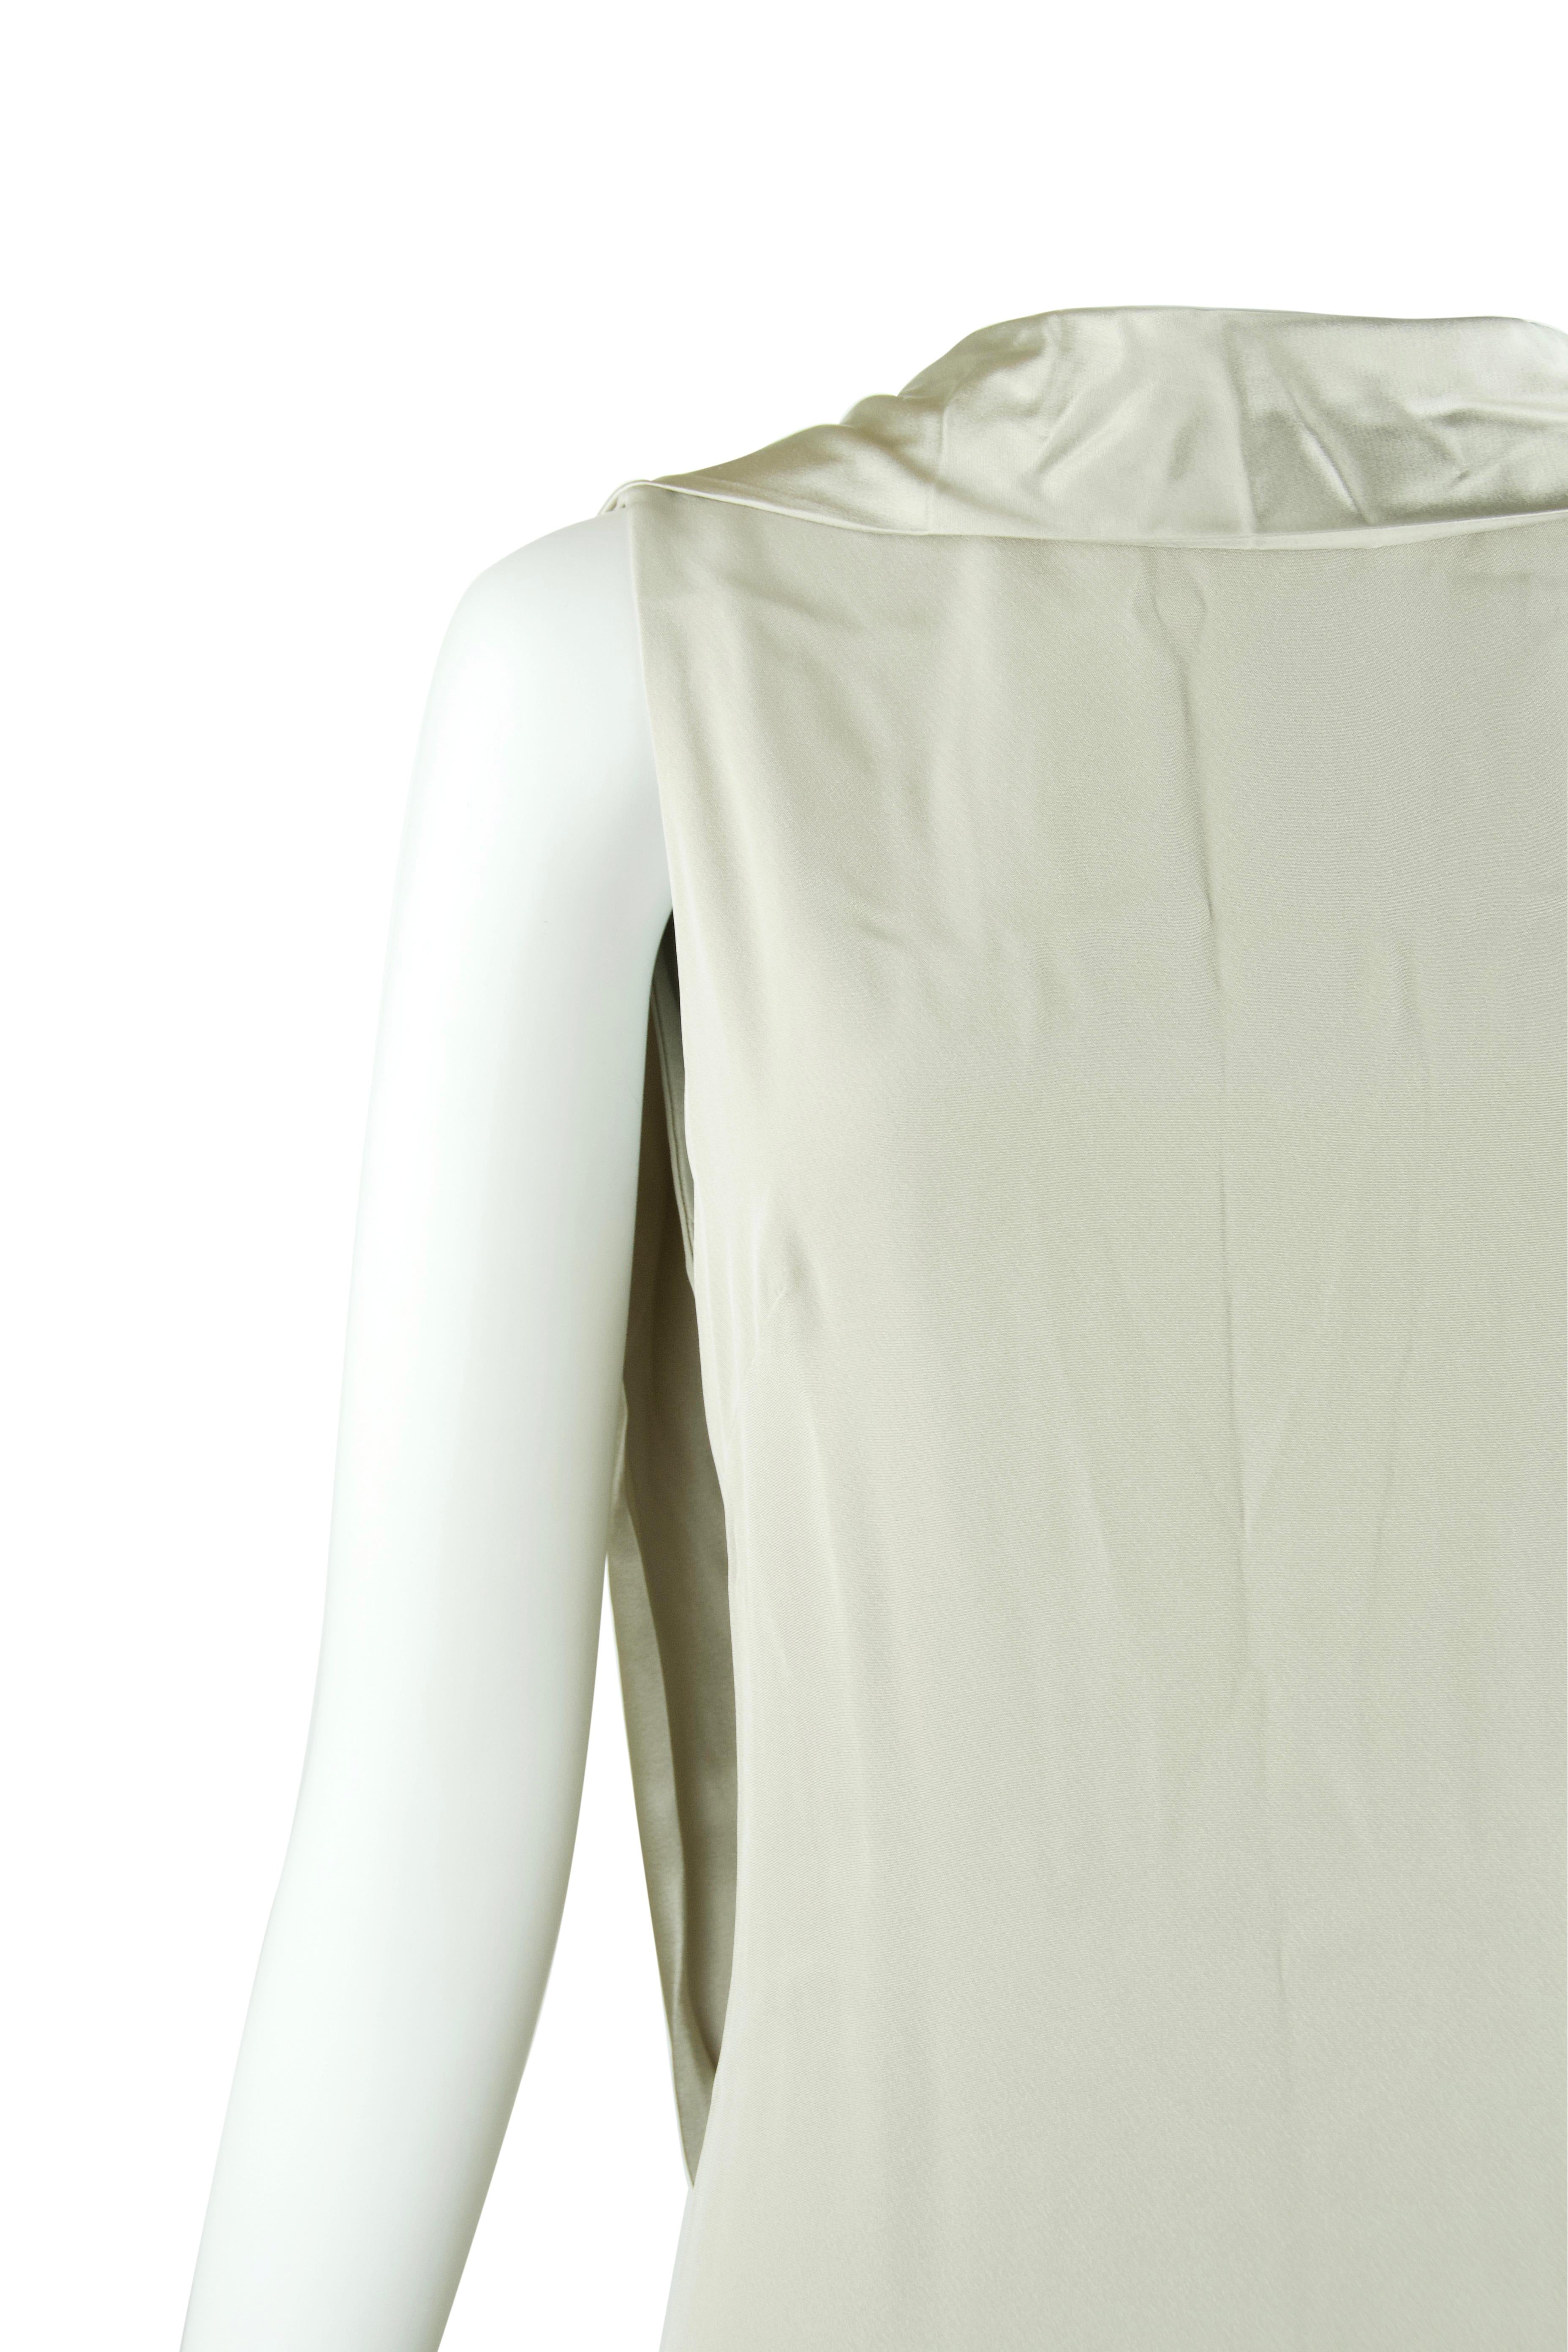 Azzaro Gray Silk Open Back Dress - Size S For Sale 2